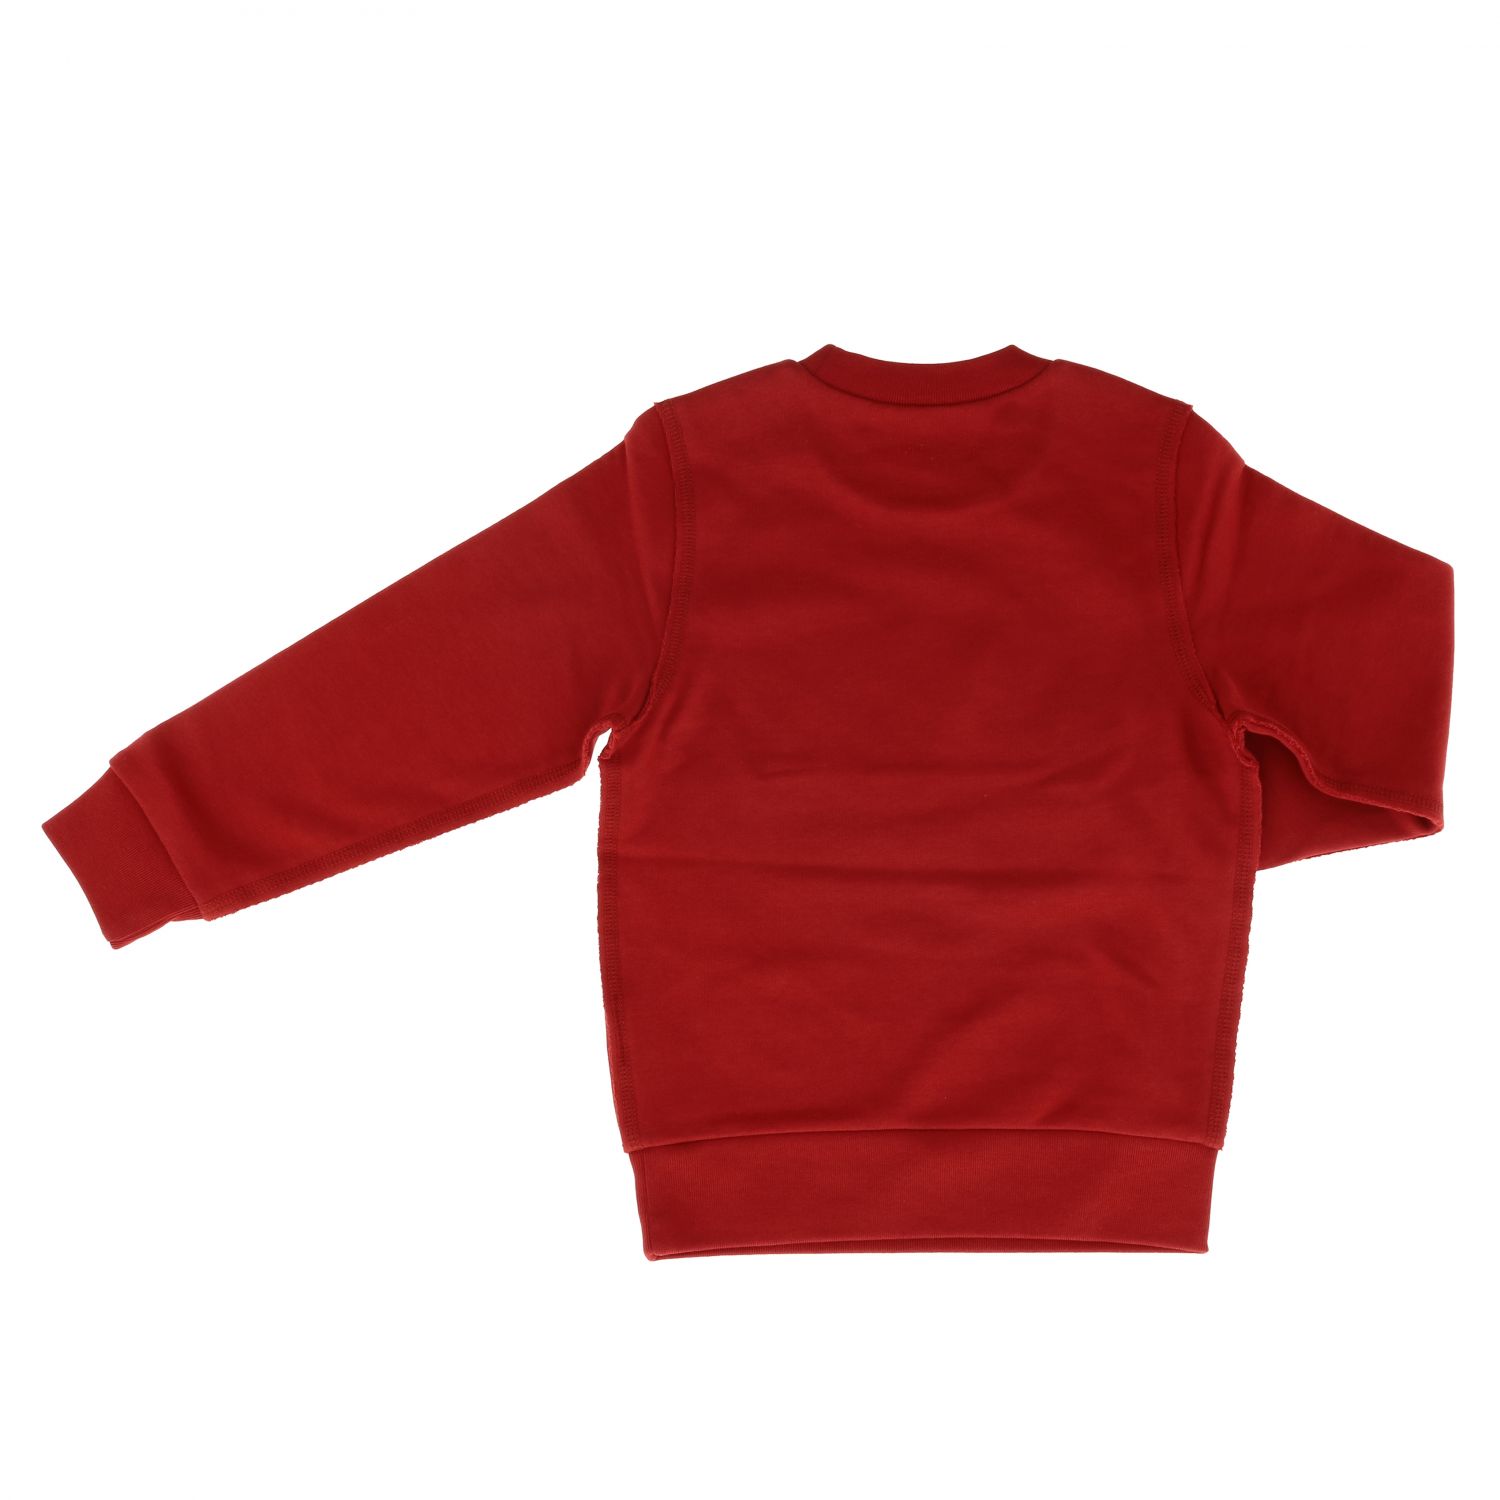 N° 21 Outlet: Sweater kids - Red | Sweater N° 21 N21431 N0005 GIGLIO.COM